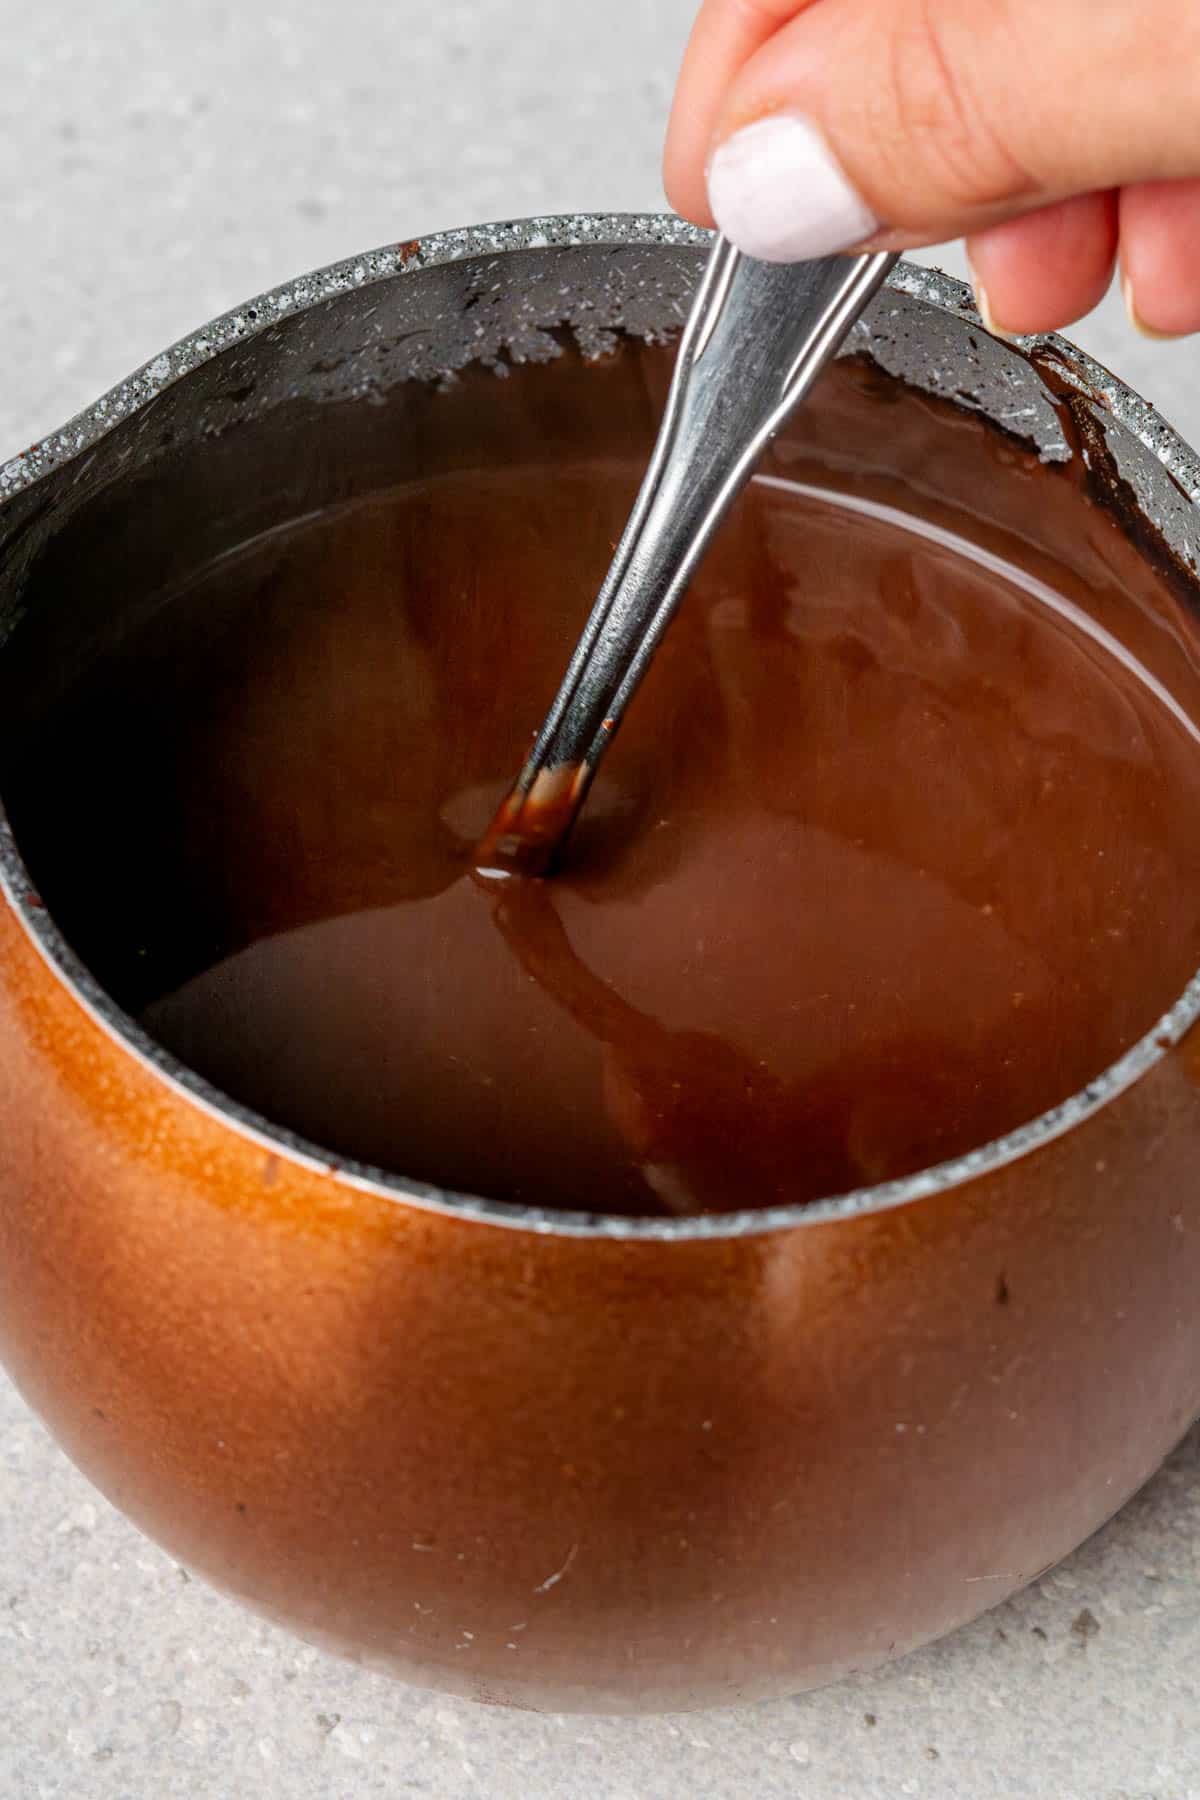 Spoon mixing hot chocolate in a mini pot